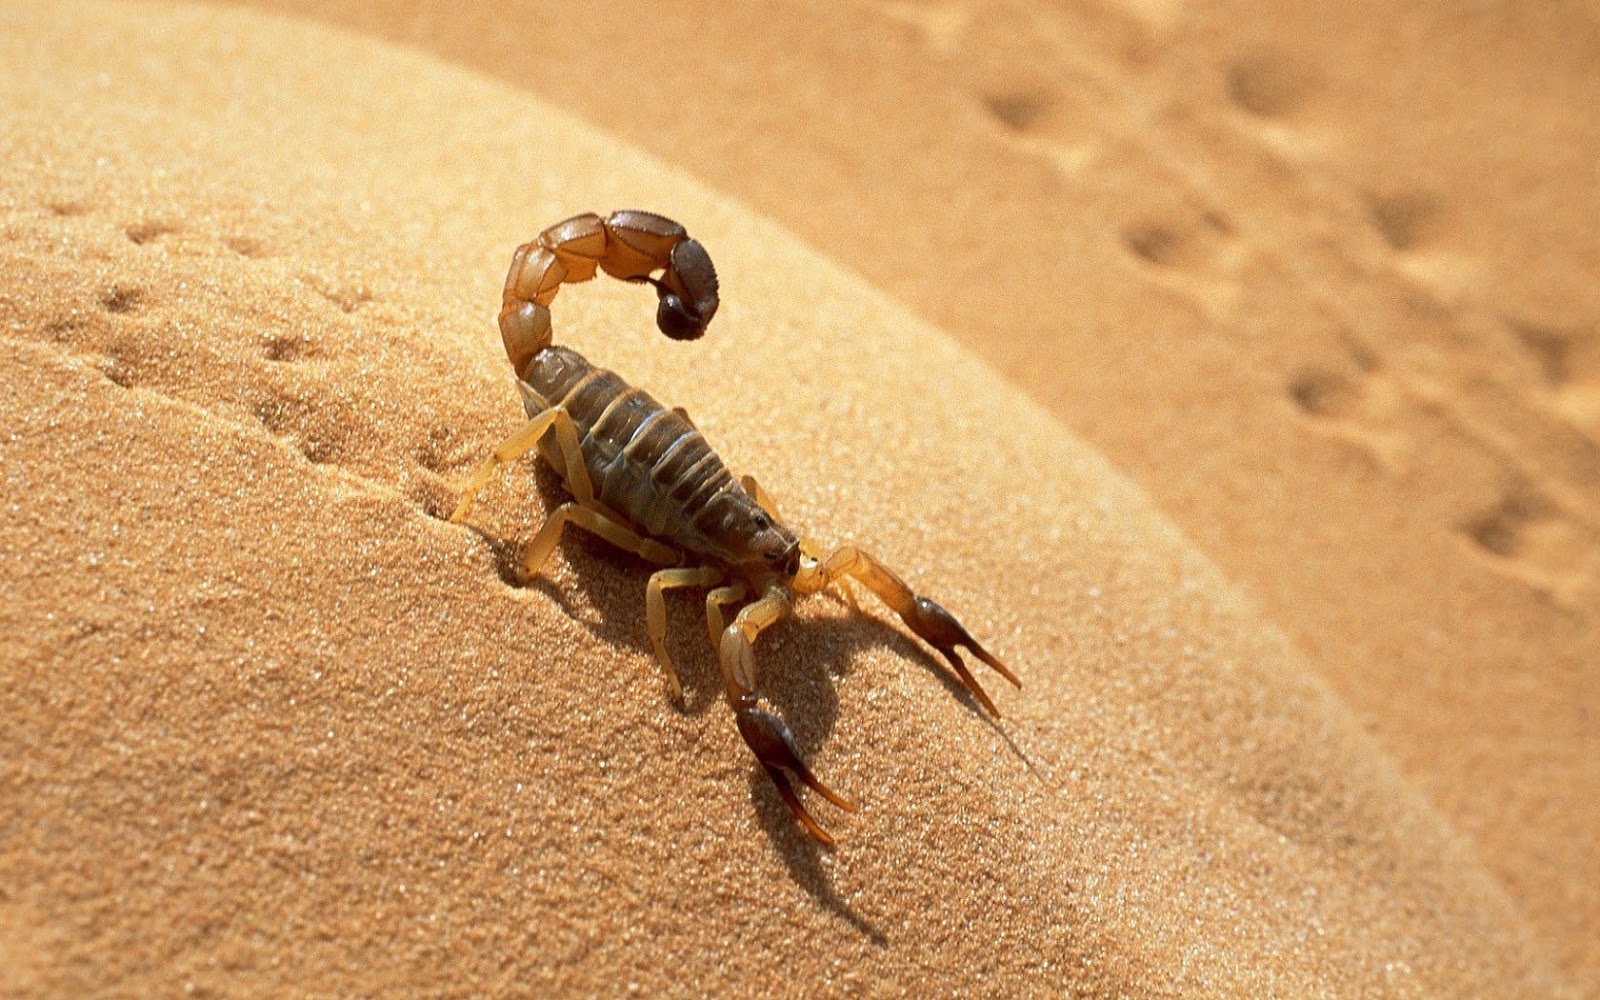 Wallpaper Of A Scorpion In The Pepper Scorpions